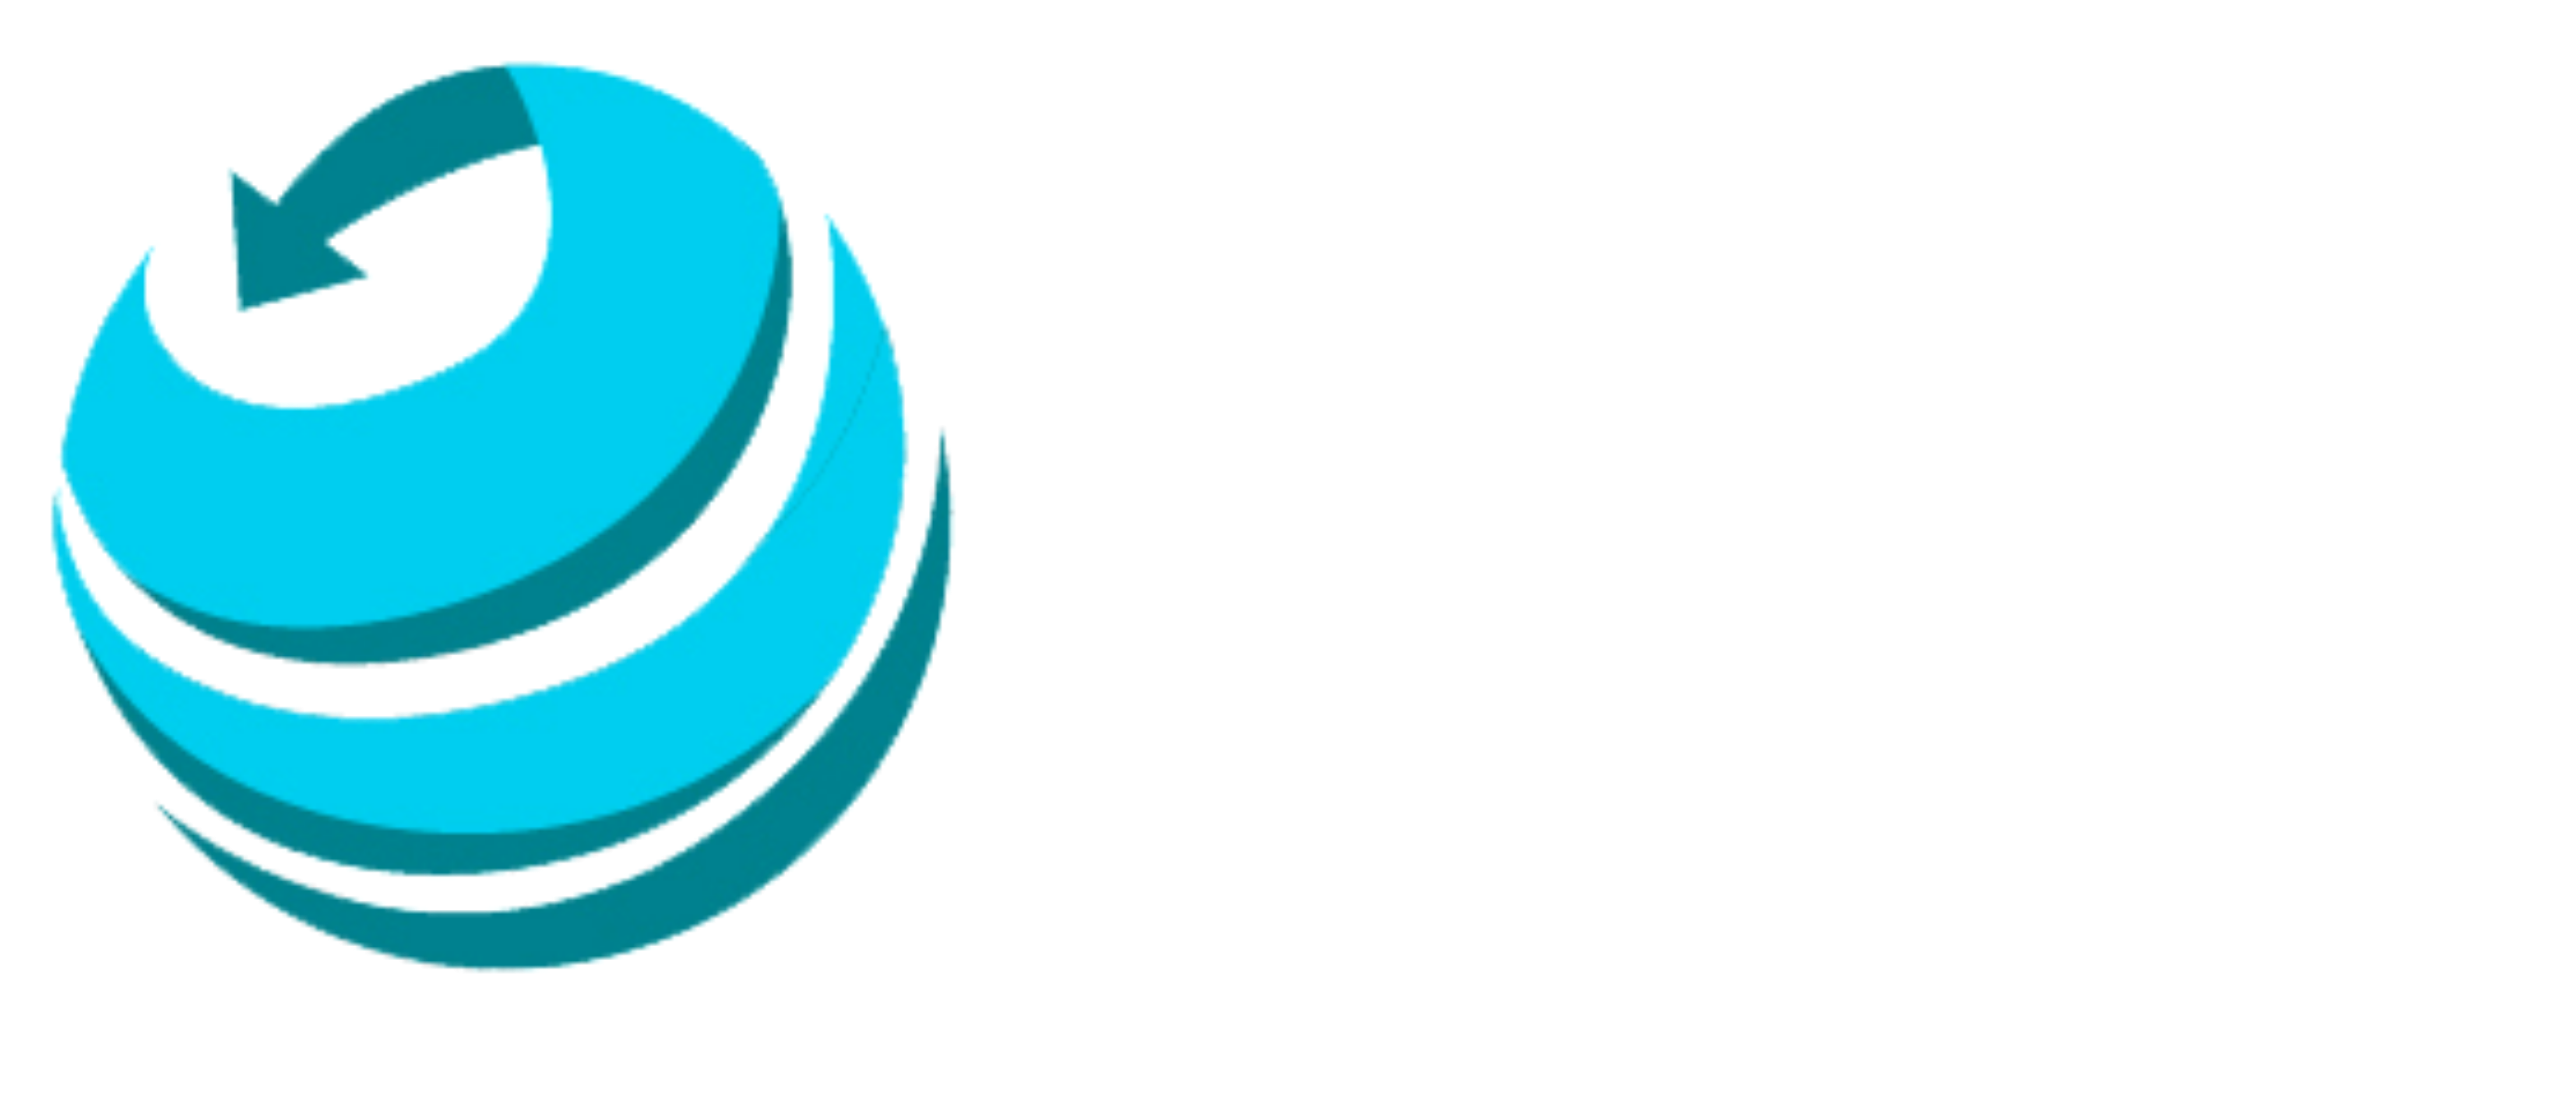 AAA Logistics & Customs